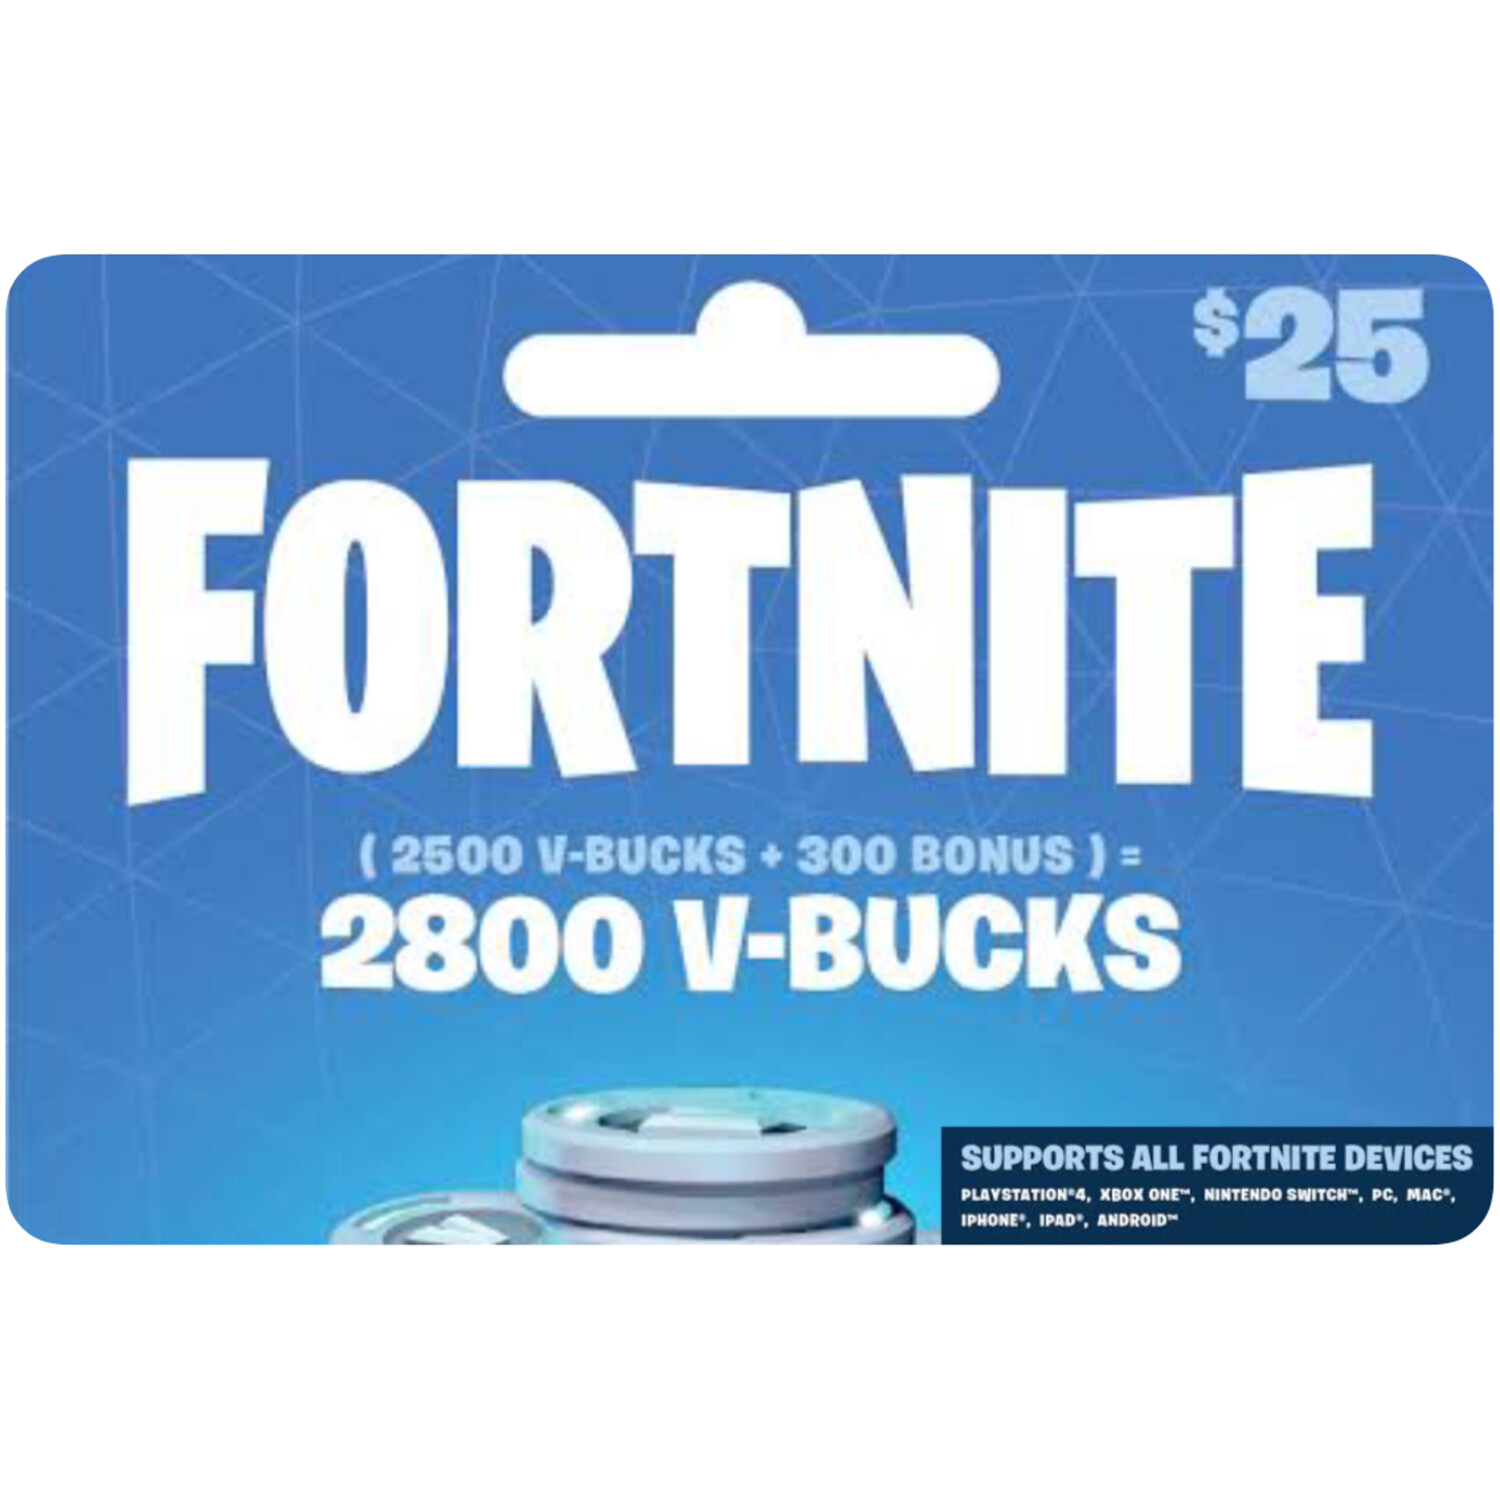 Fortnite 2800 V-Bucks Gift Card Global